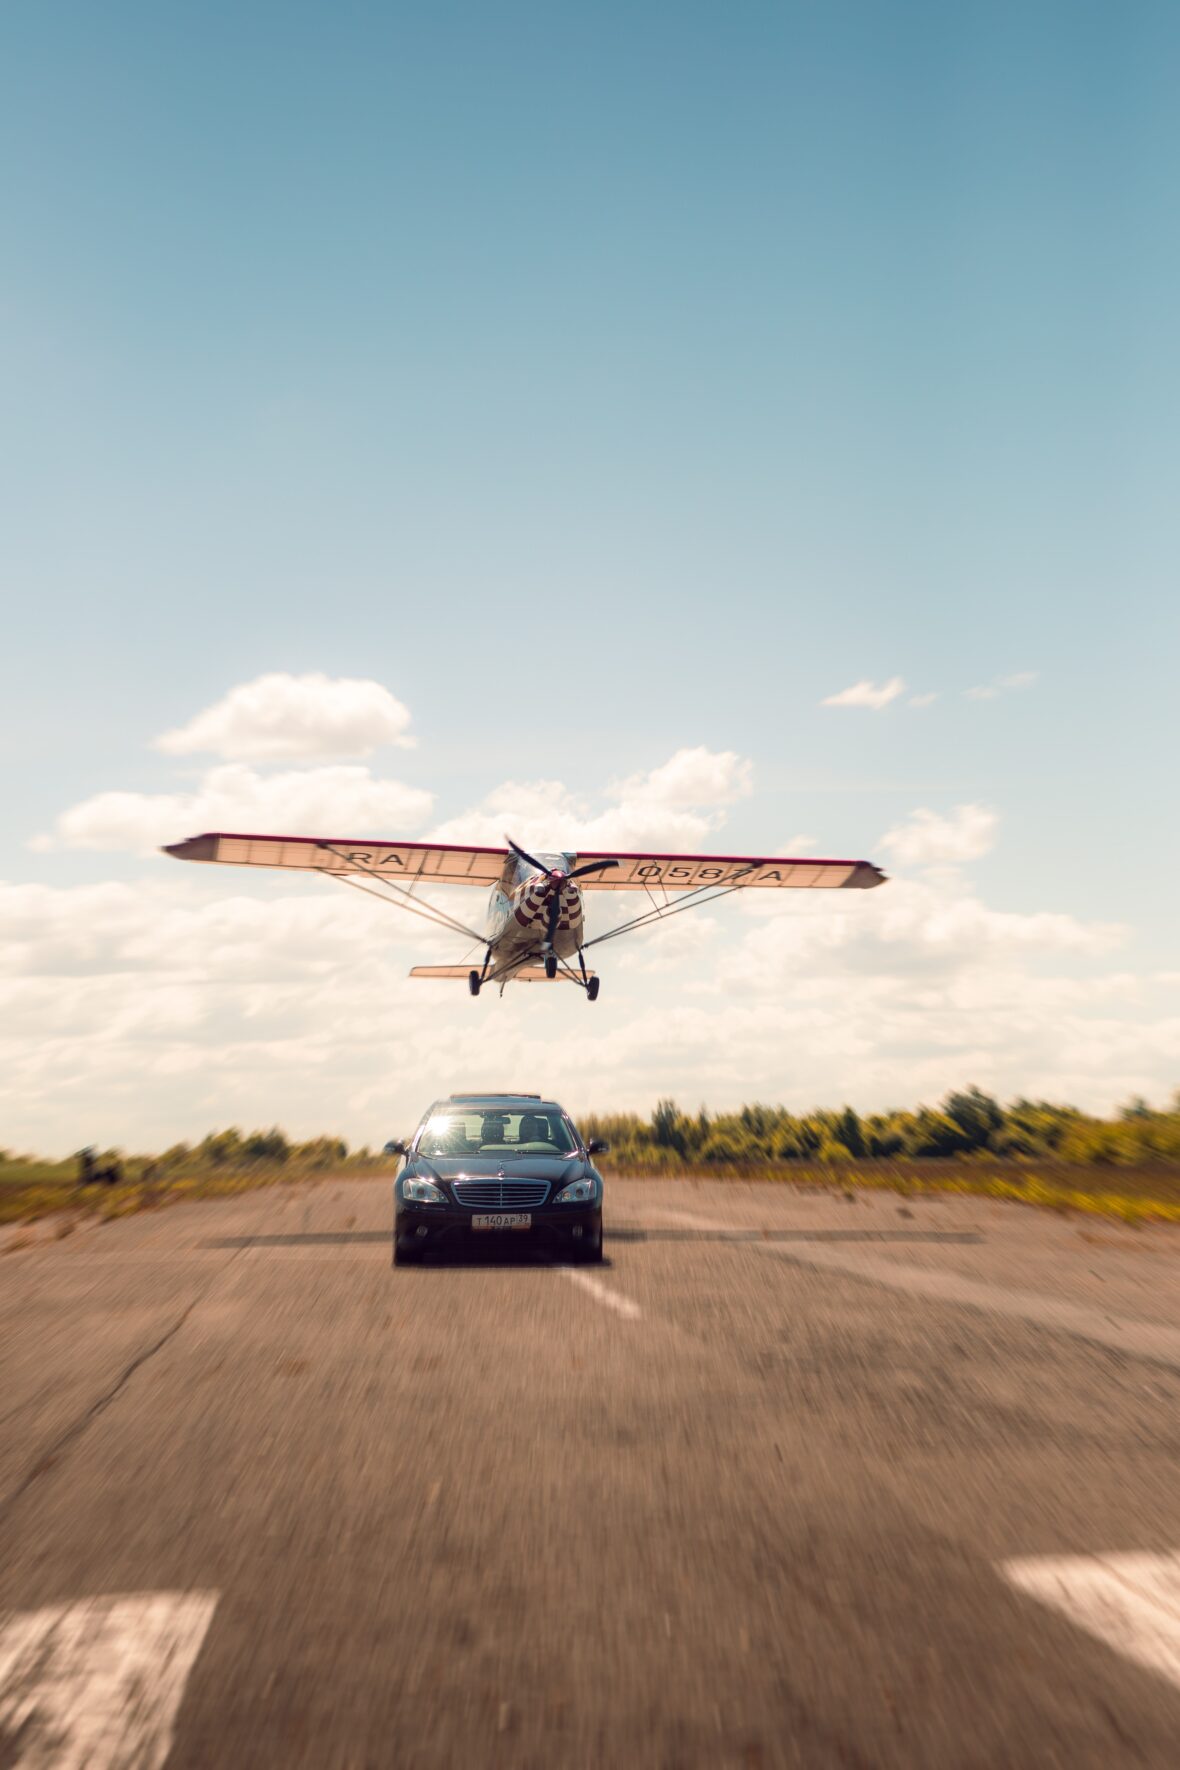 Terrafugia’s flying car sets 2019 debut with tech upgrade